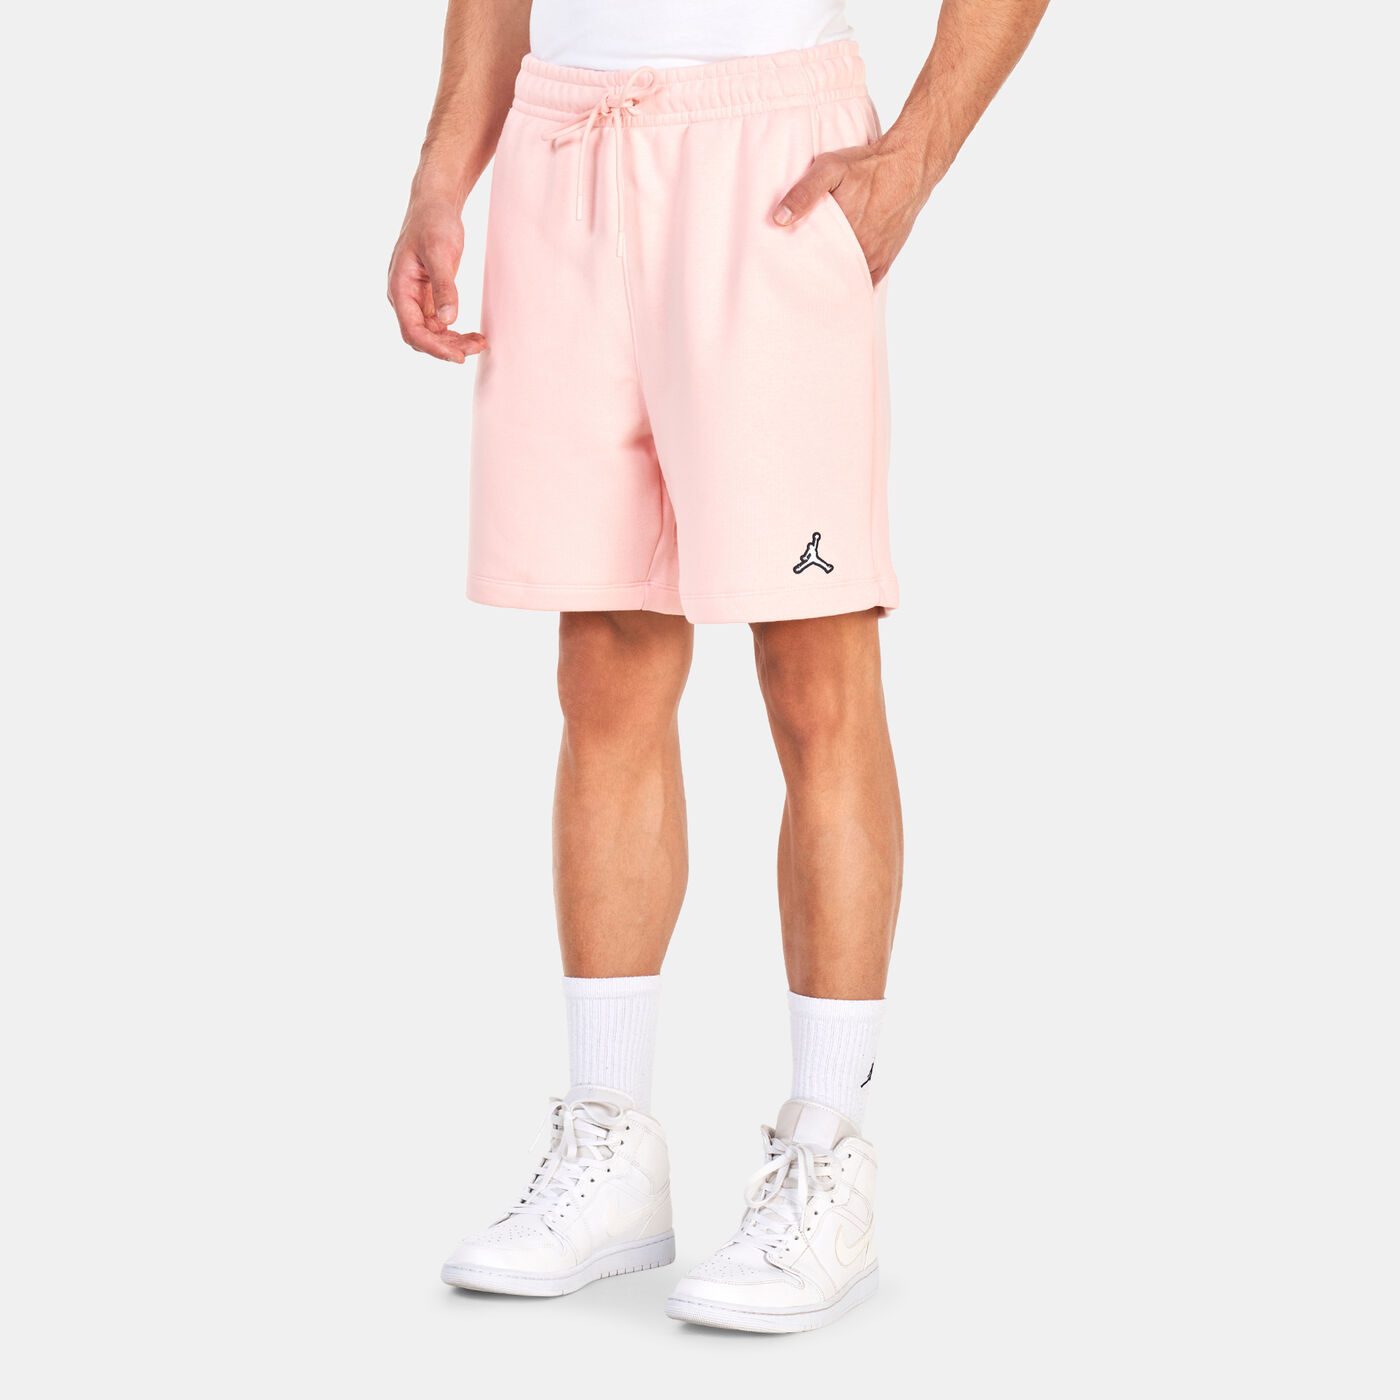  Men's Brooklyn Fleece Shorts